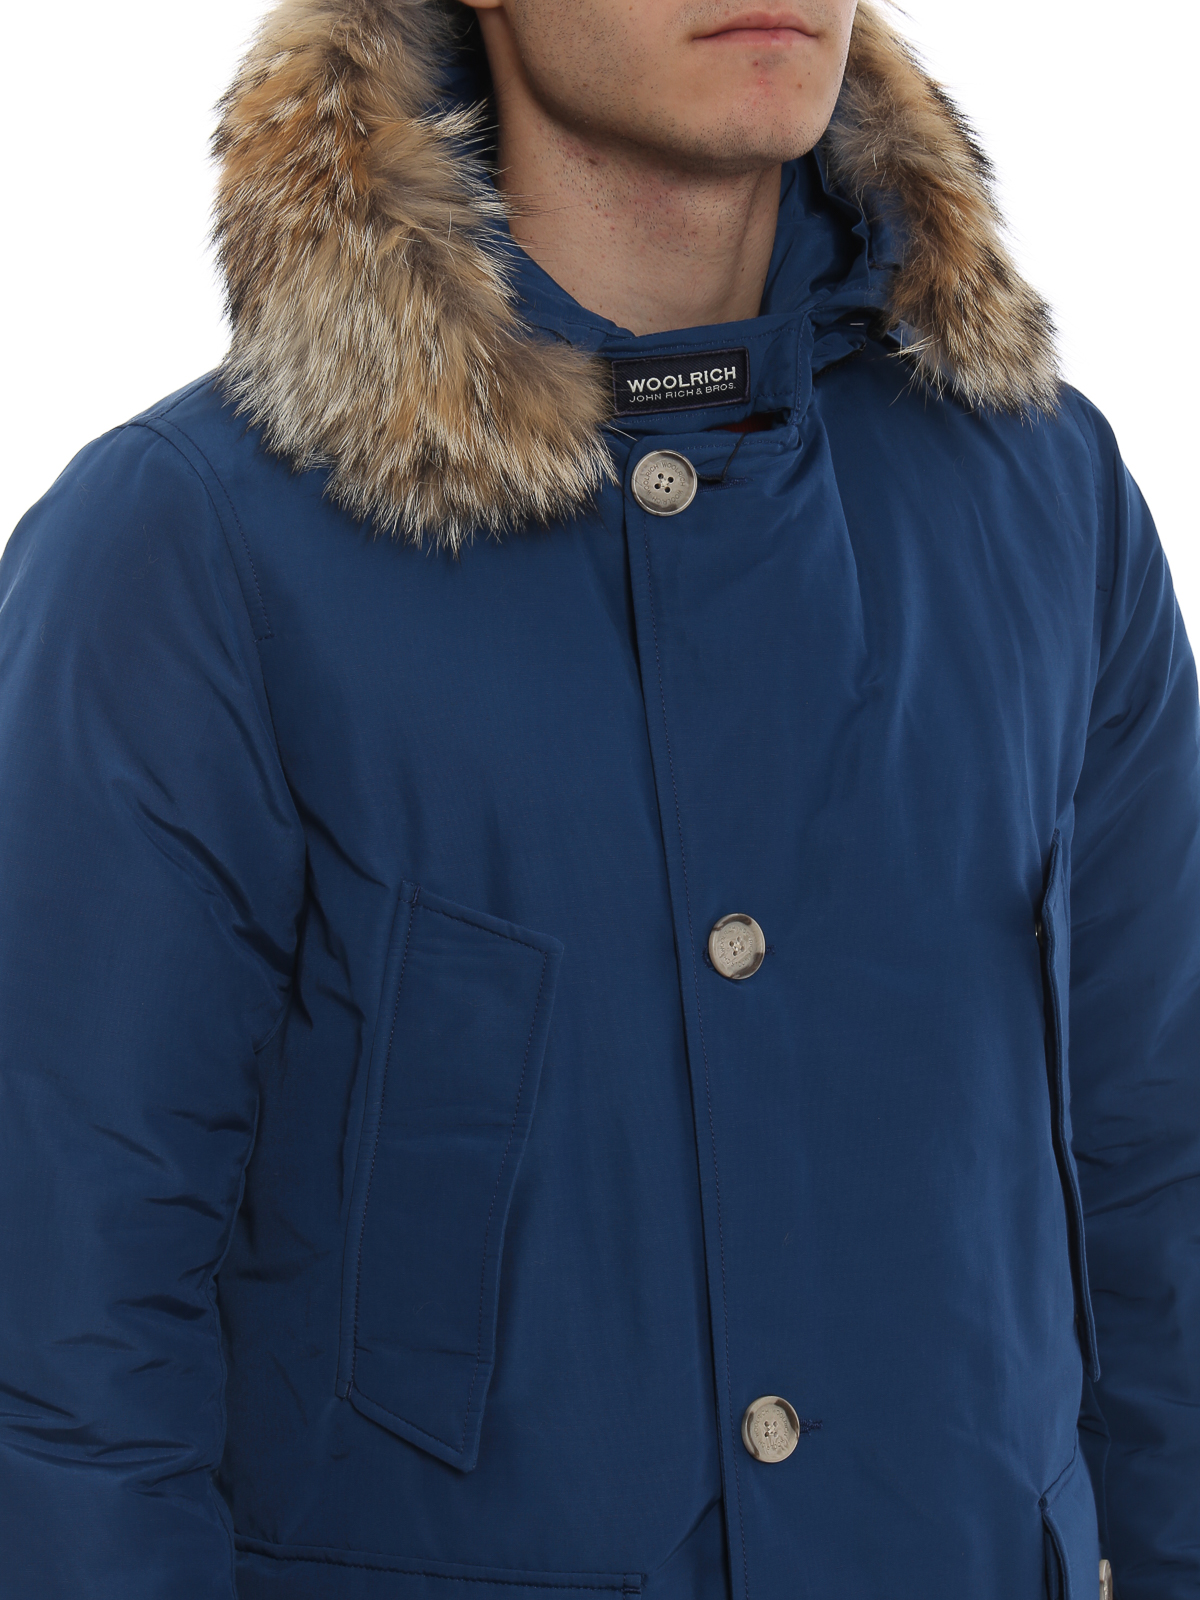 for Men Mens Clothing Coats Parka coats Blue Save 54% Men in Blue,Black Woolrich Arctic Parka With Removable Fur Coat 